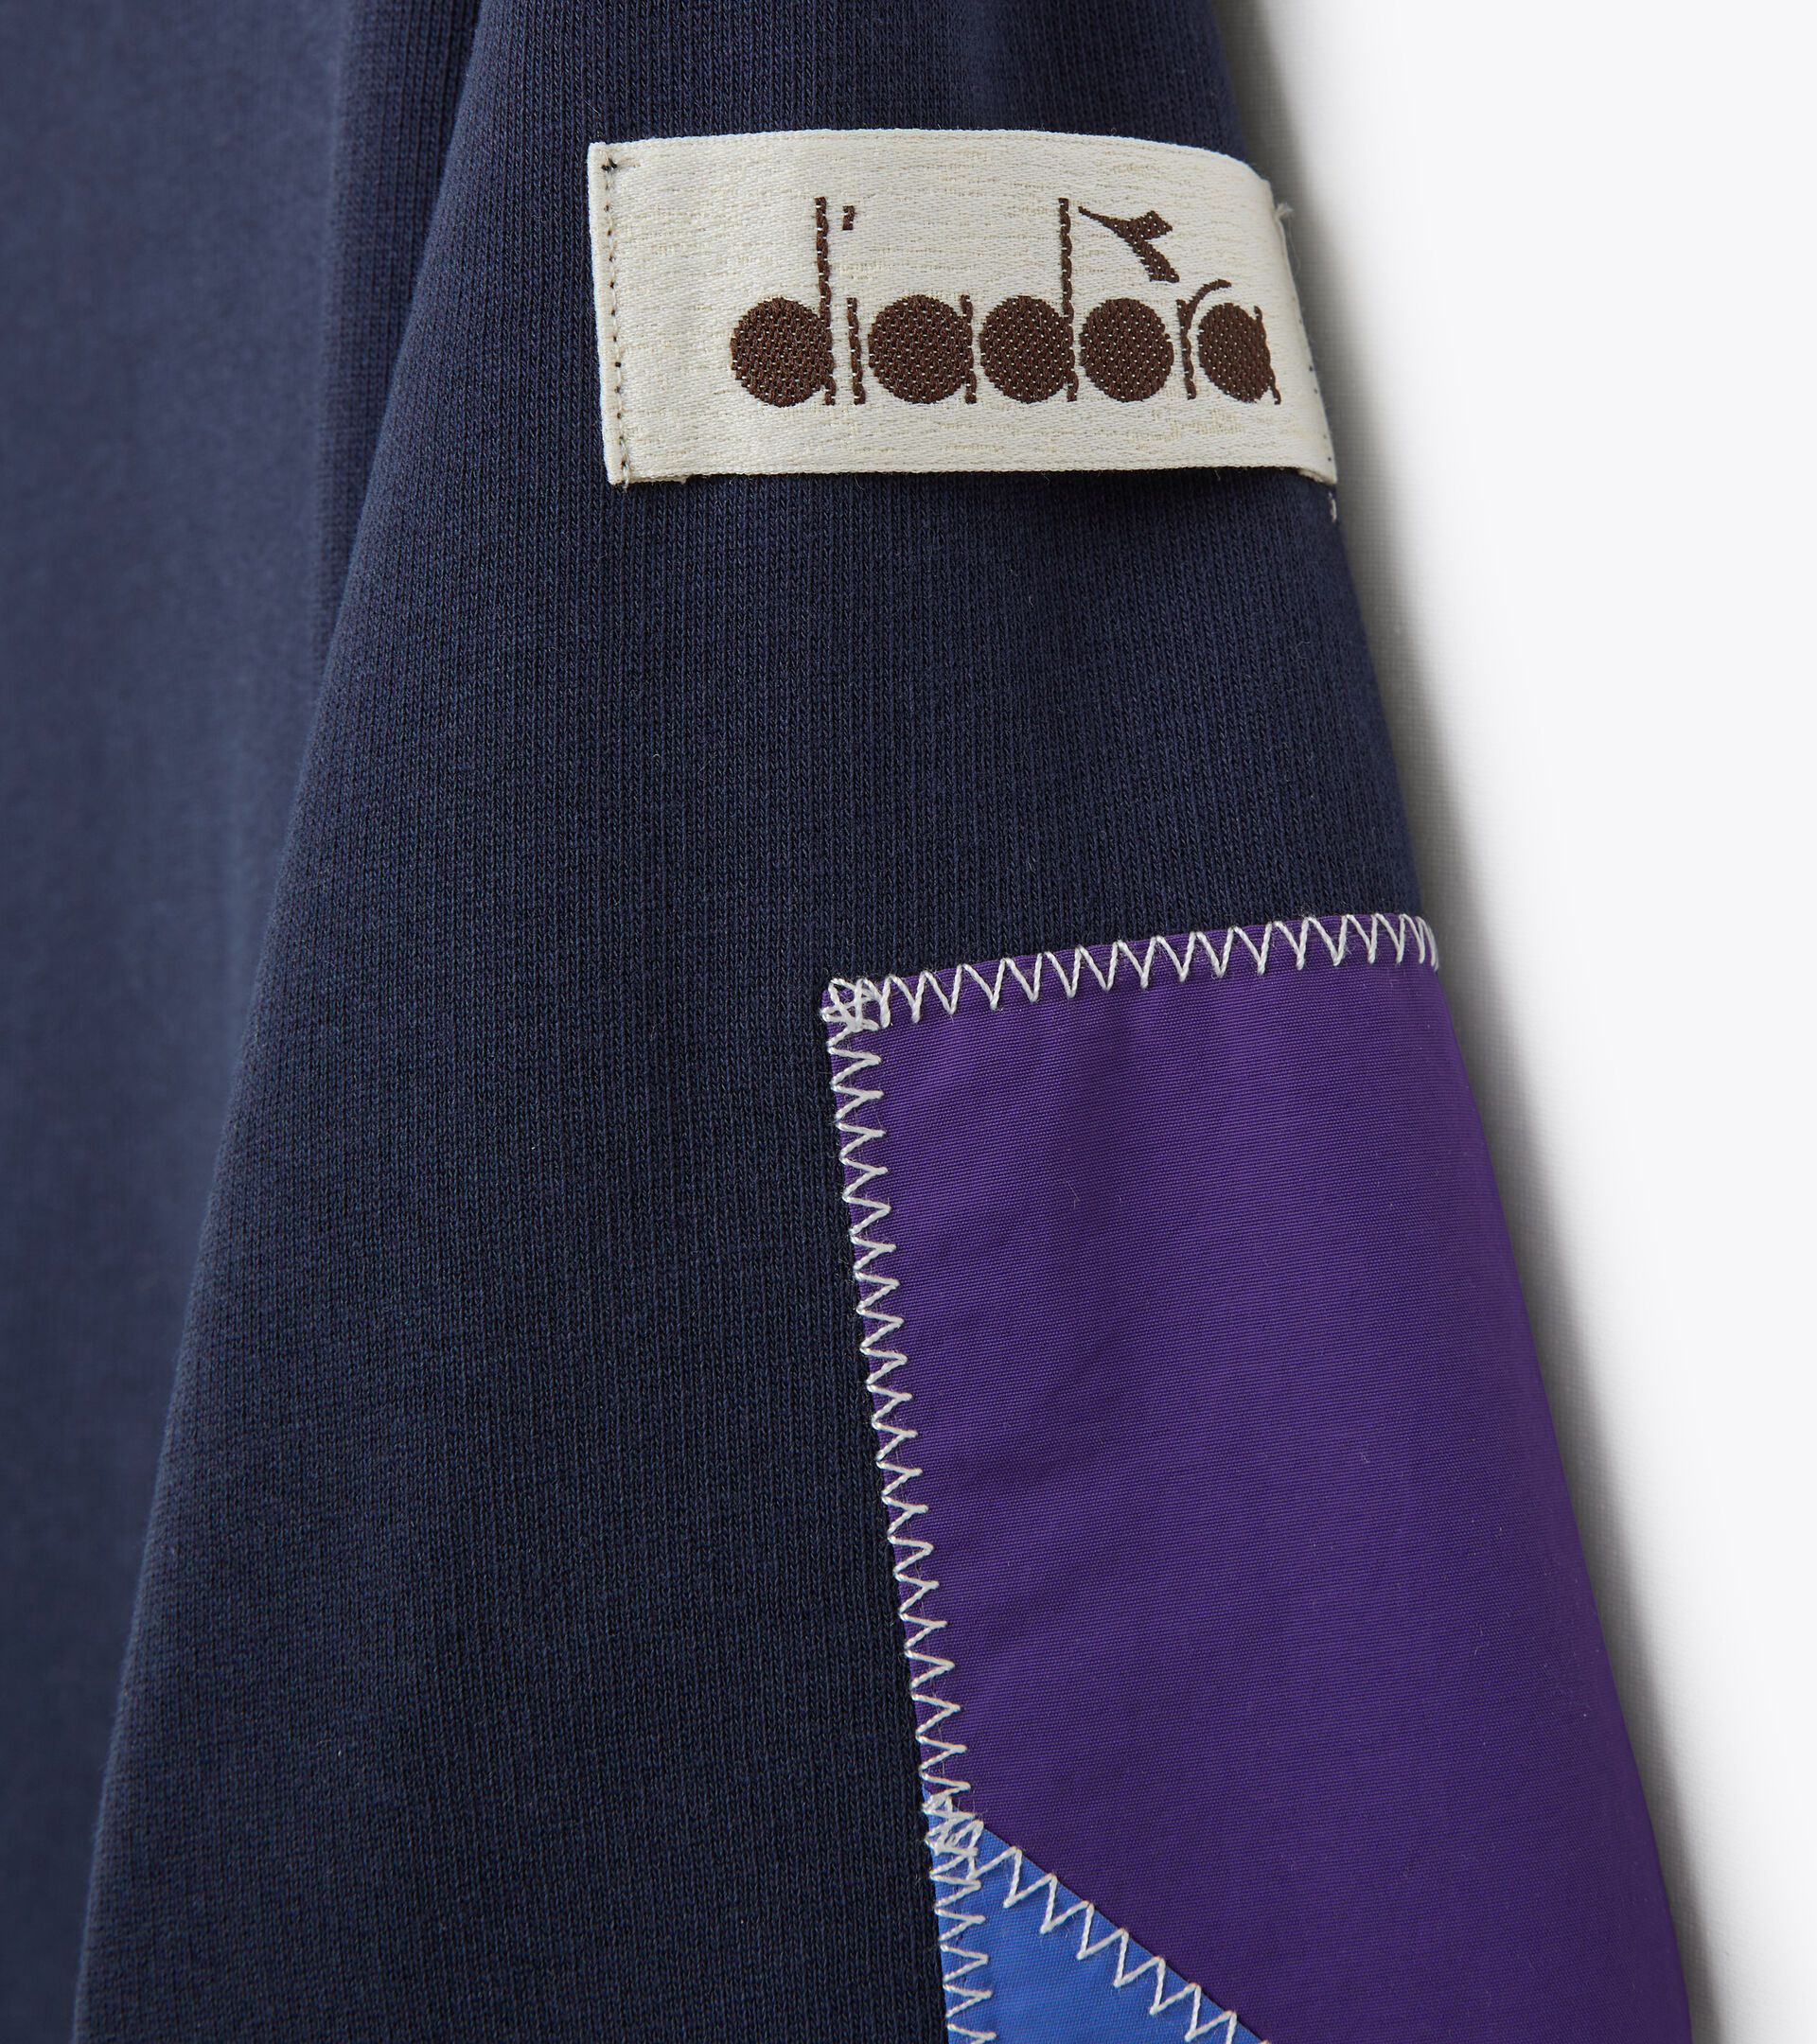 Made in Italy sweatshirt 2030 - Women  L. SWEATSHIRT CREW 2030 BLUE CORSAIR - Diadora